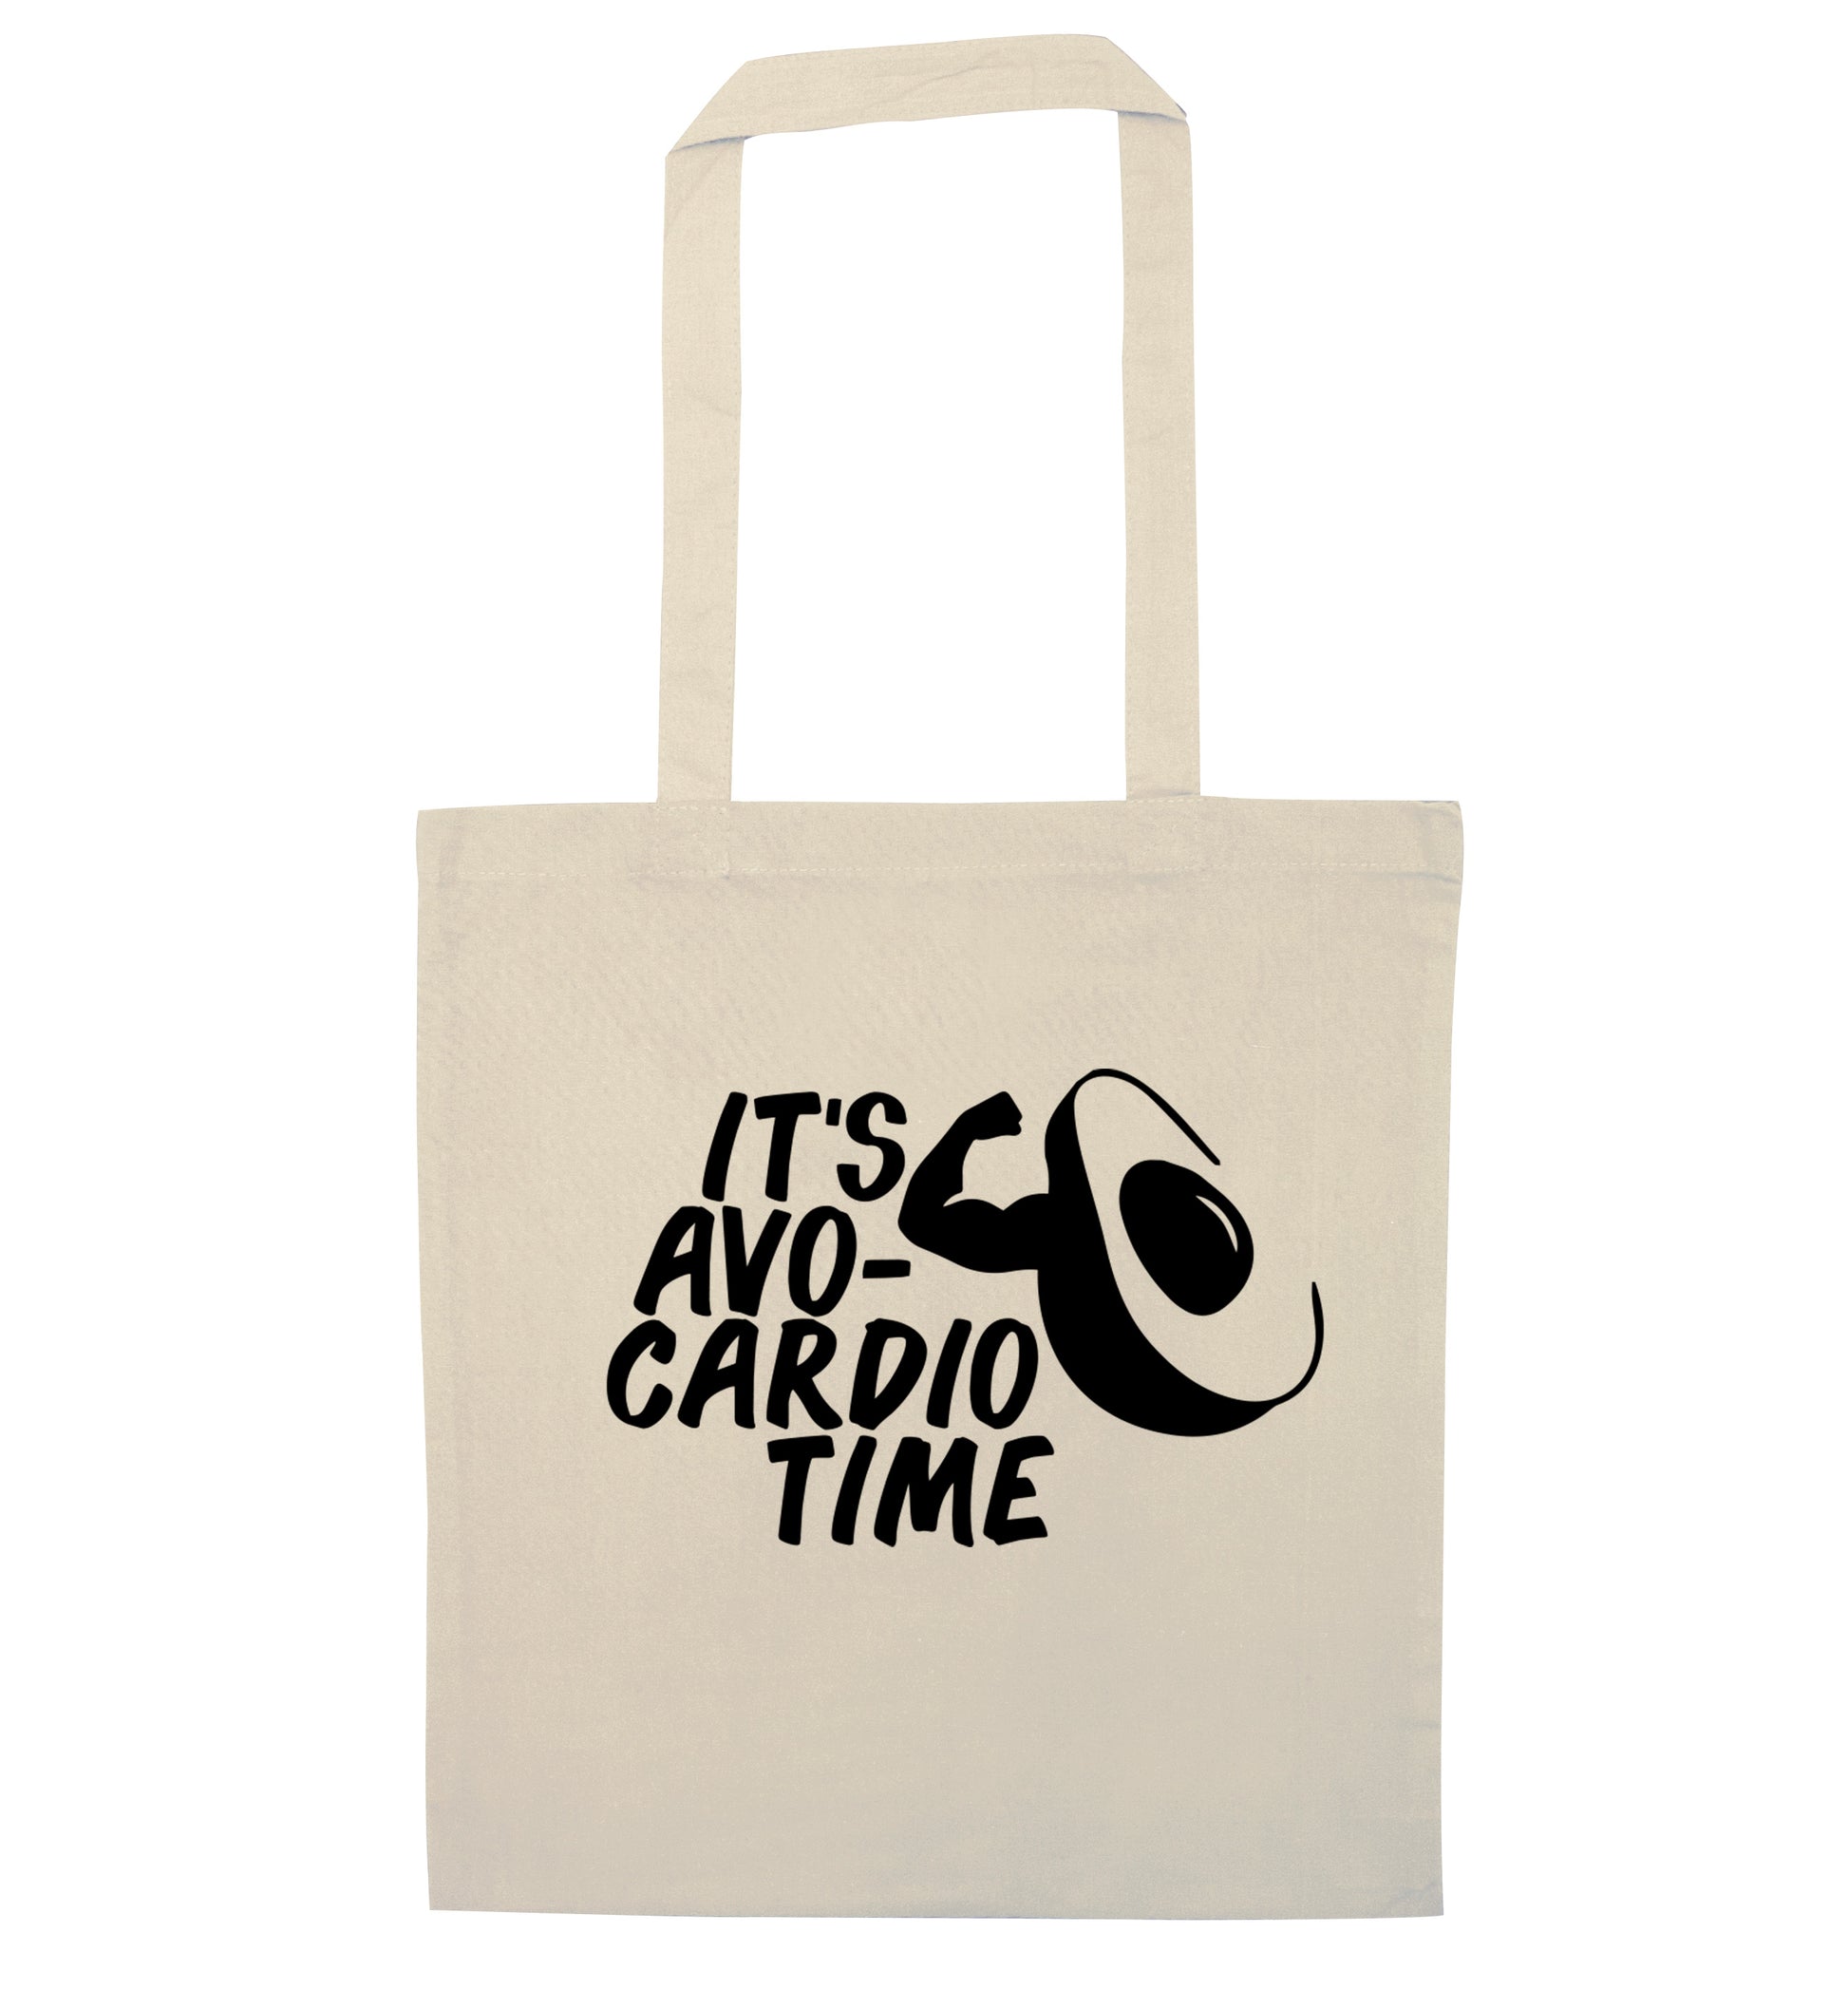 It's avo-cardio time natural tote bag